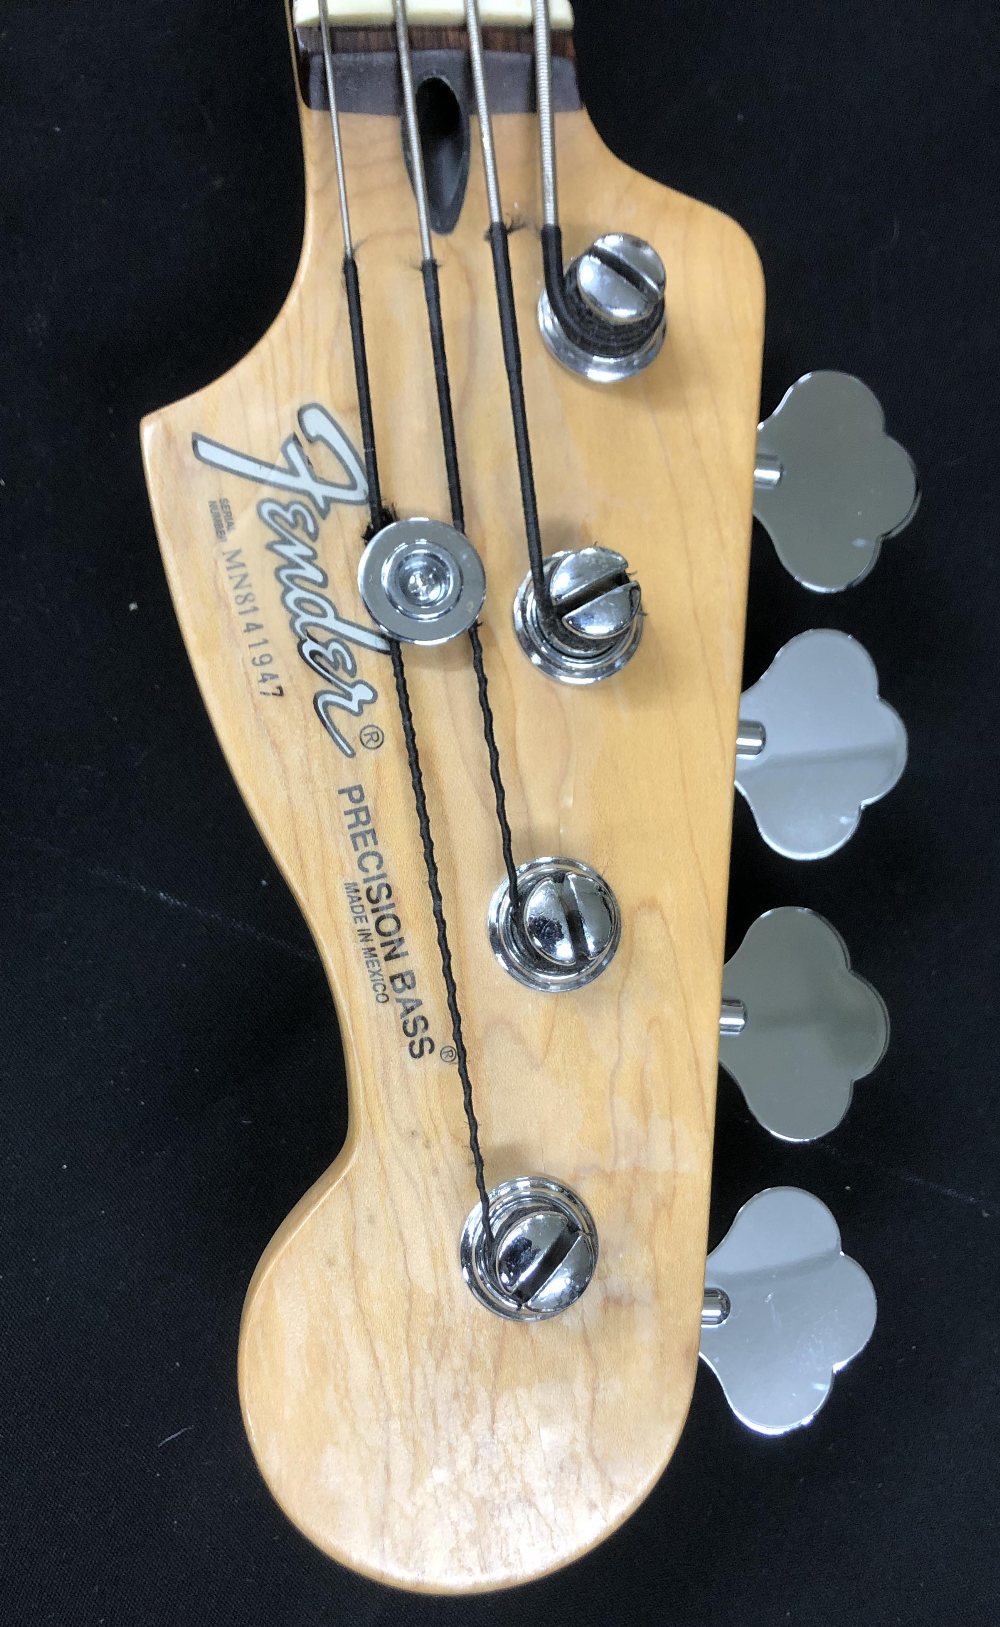 1998 Fender Precision Bass guitar, made in Mexico, ser. no. MN8xxxxx7; Finish: sunburst, lacquer - Image 3 of 4